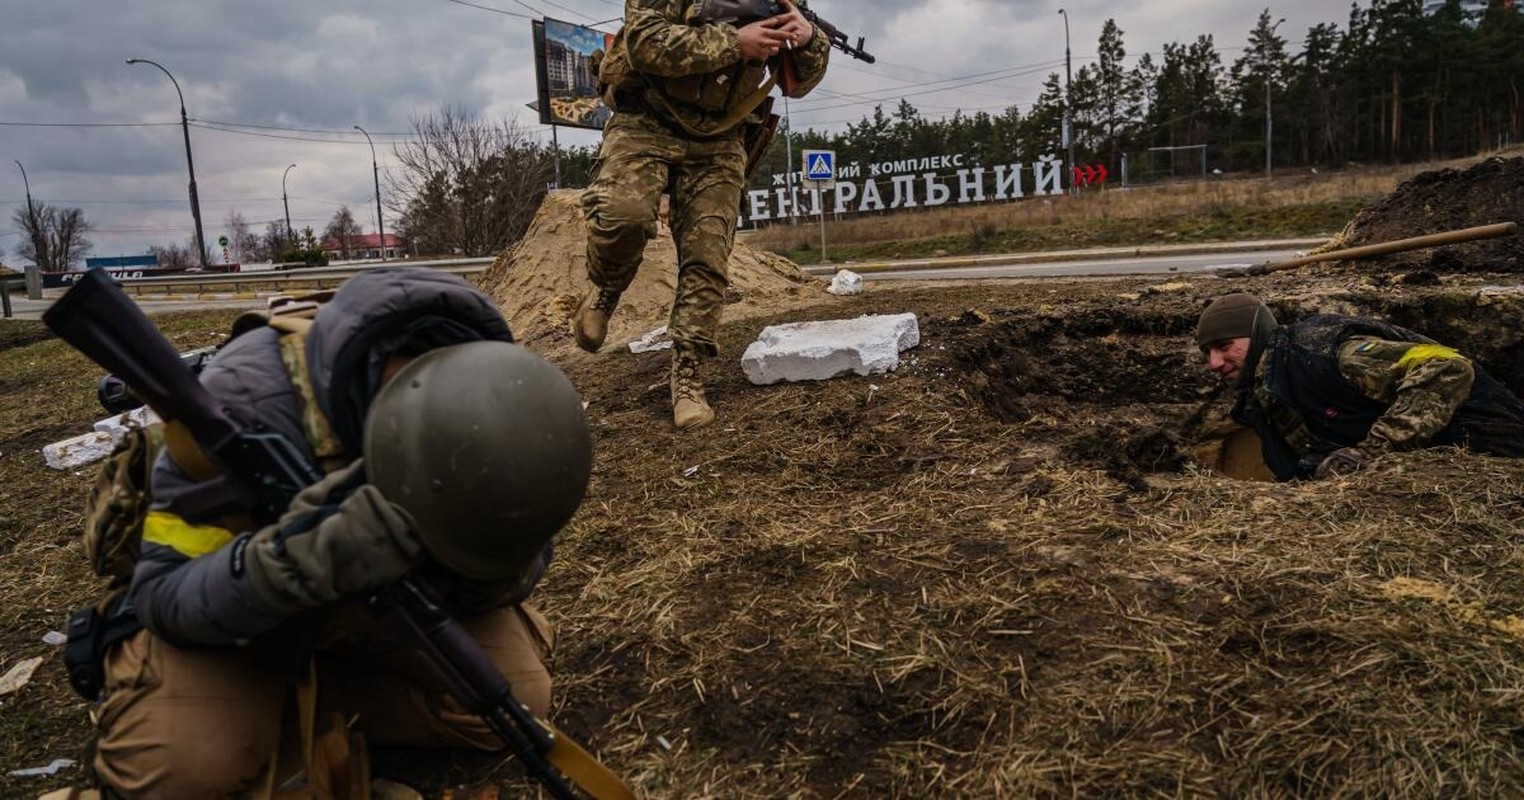 Sieu bom Nga “thoi bay” nhieu xe tang va hang chuc binh si Ukraine-Hinh-10